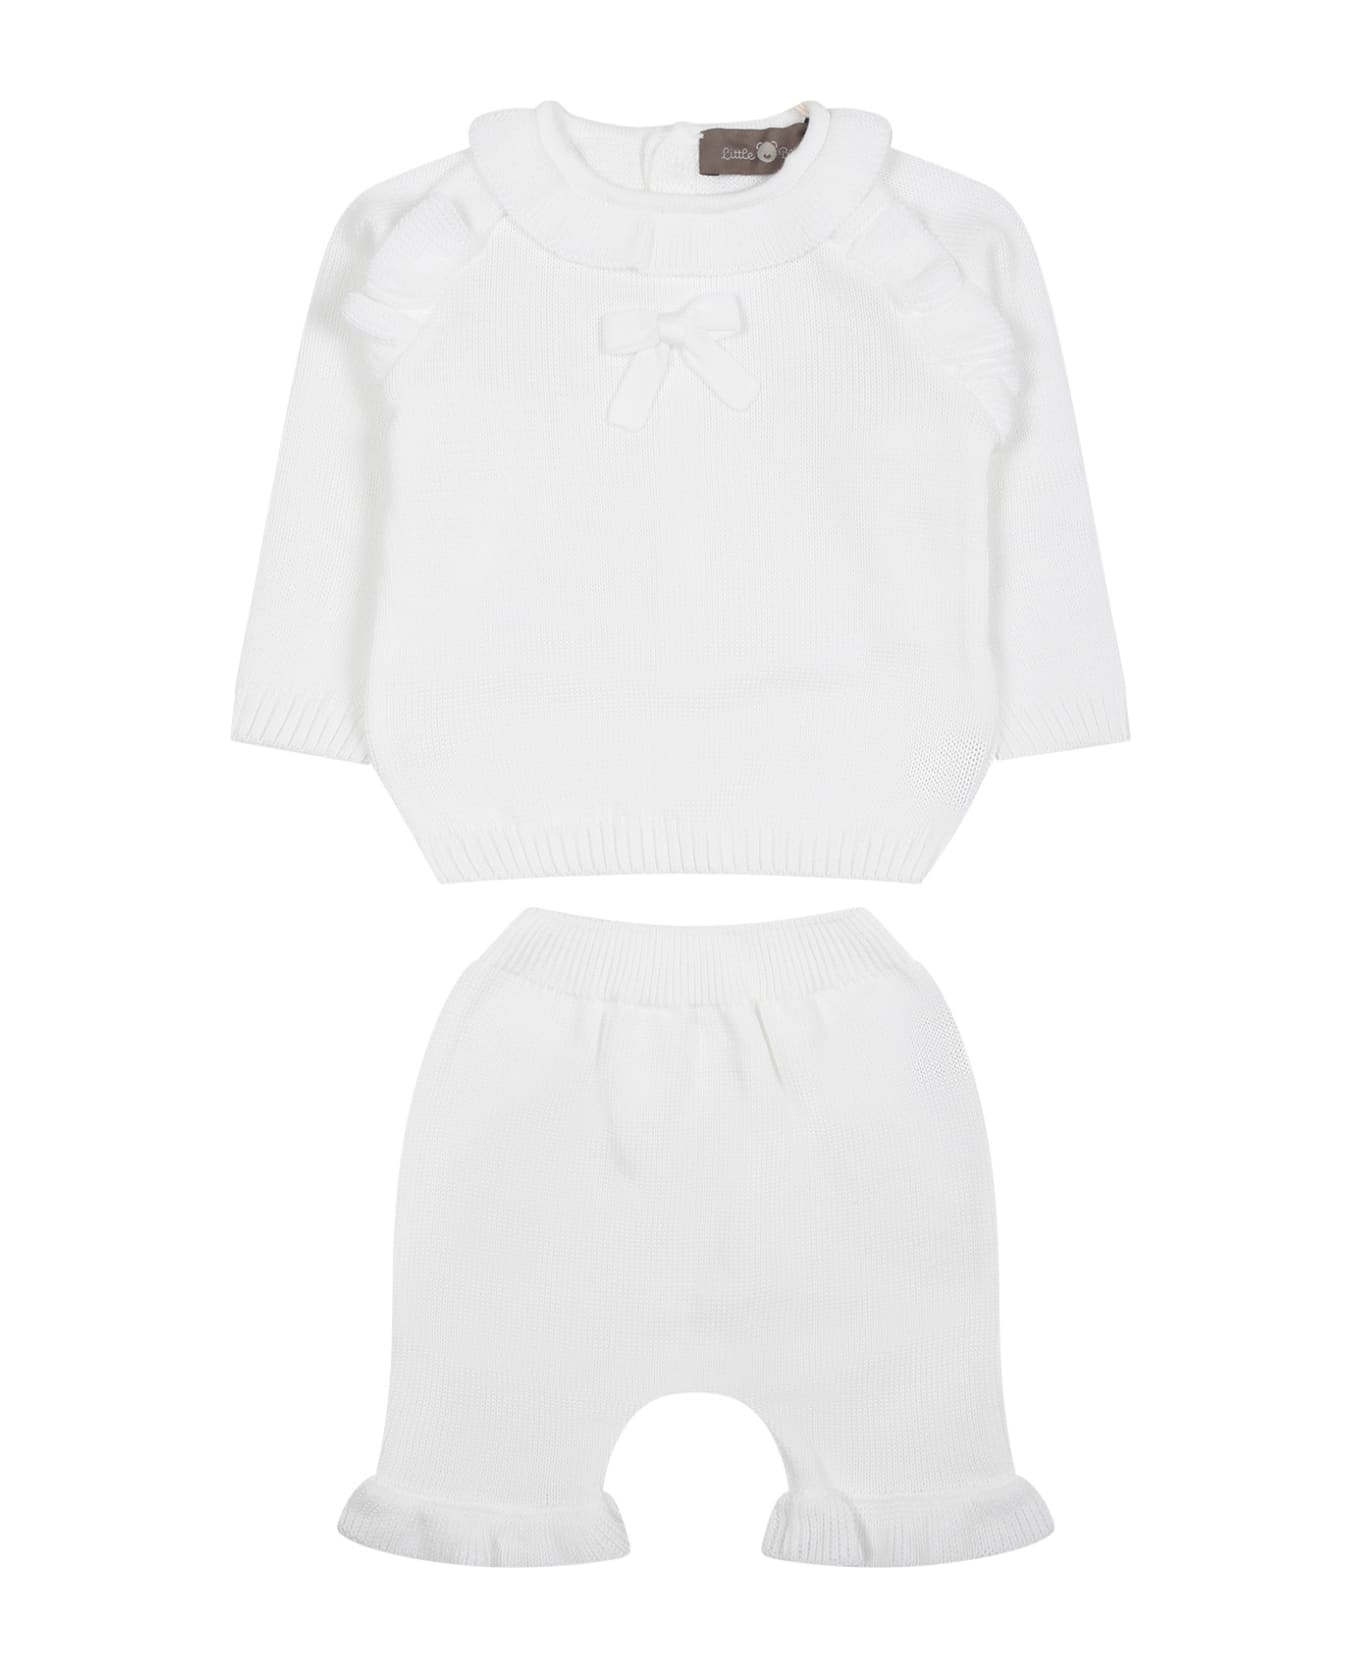 Little Bear White Birth Suit For Baby Girl - White